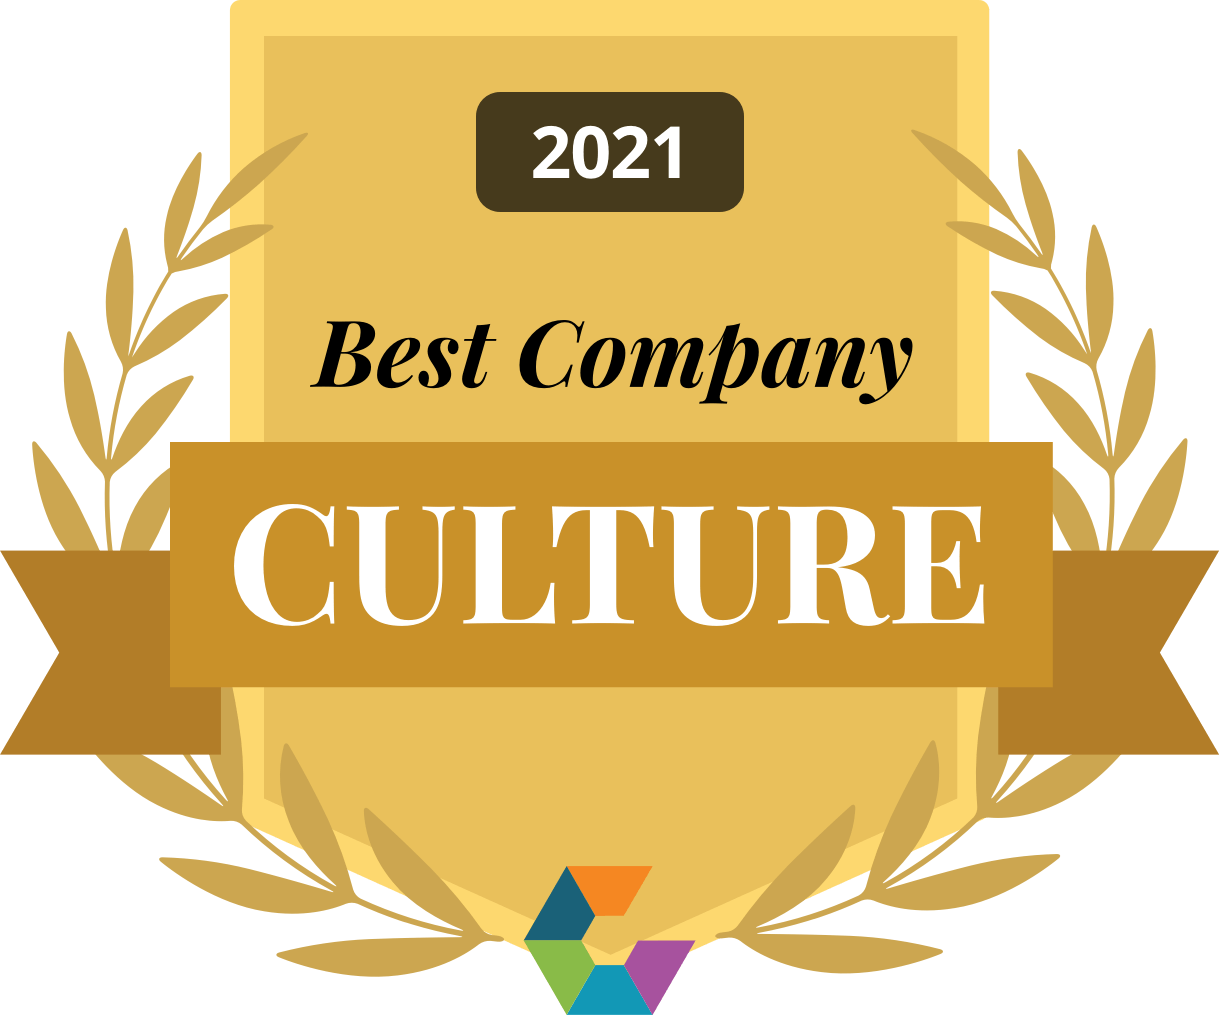 Best company culture award 2021